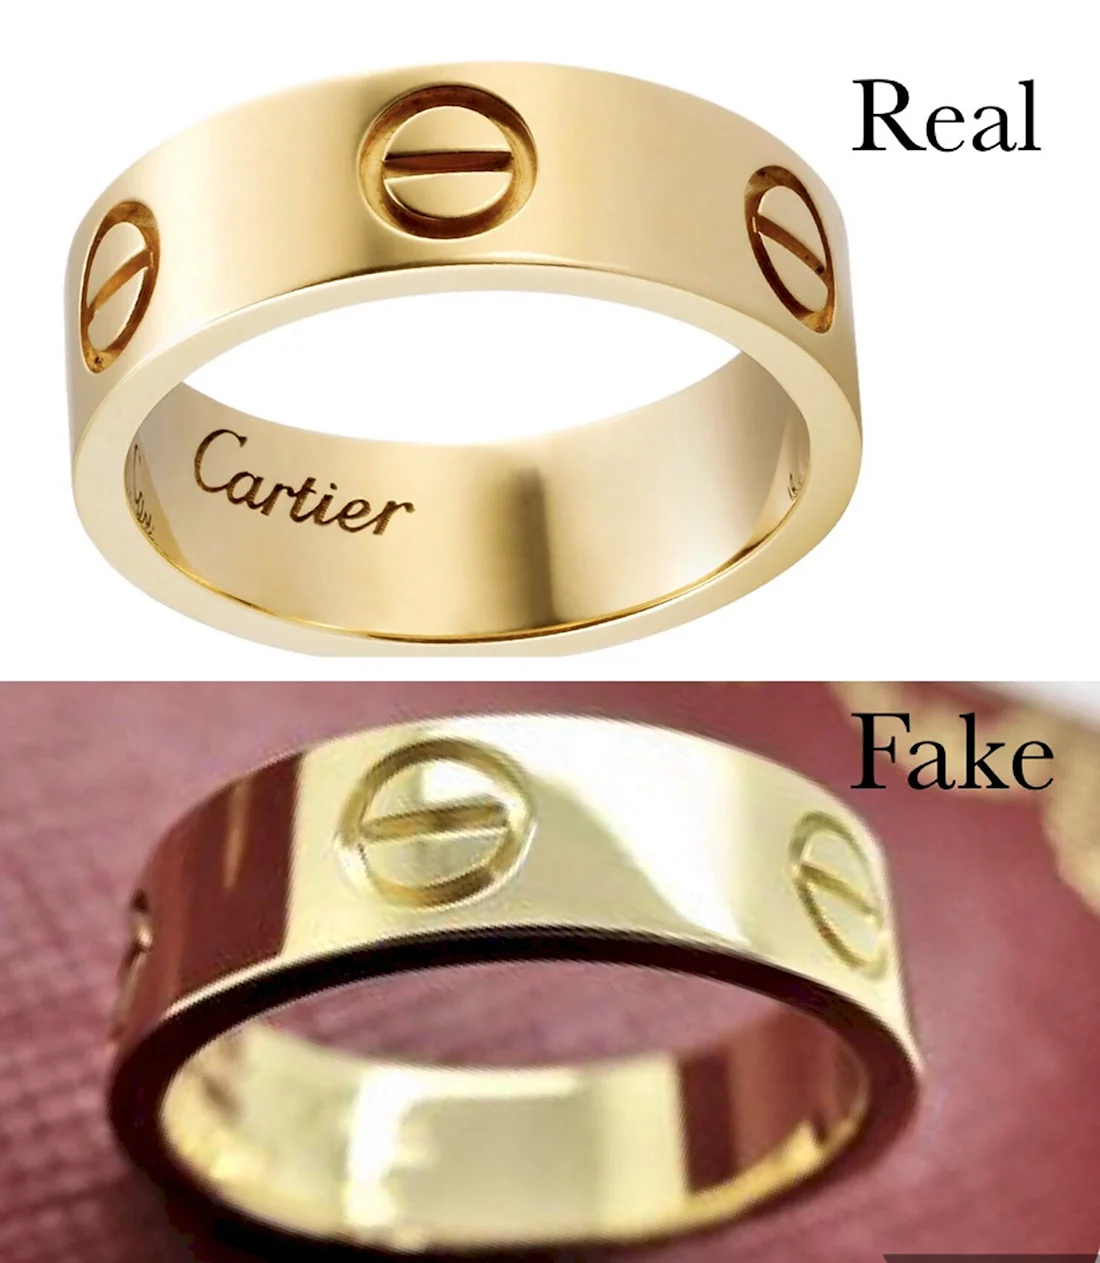 Cartier 750 Ring 52833a